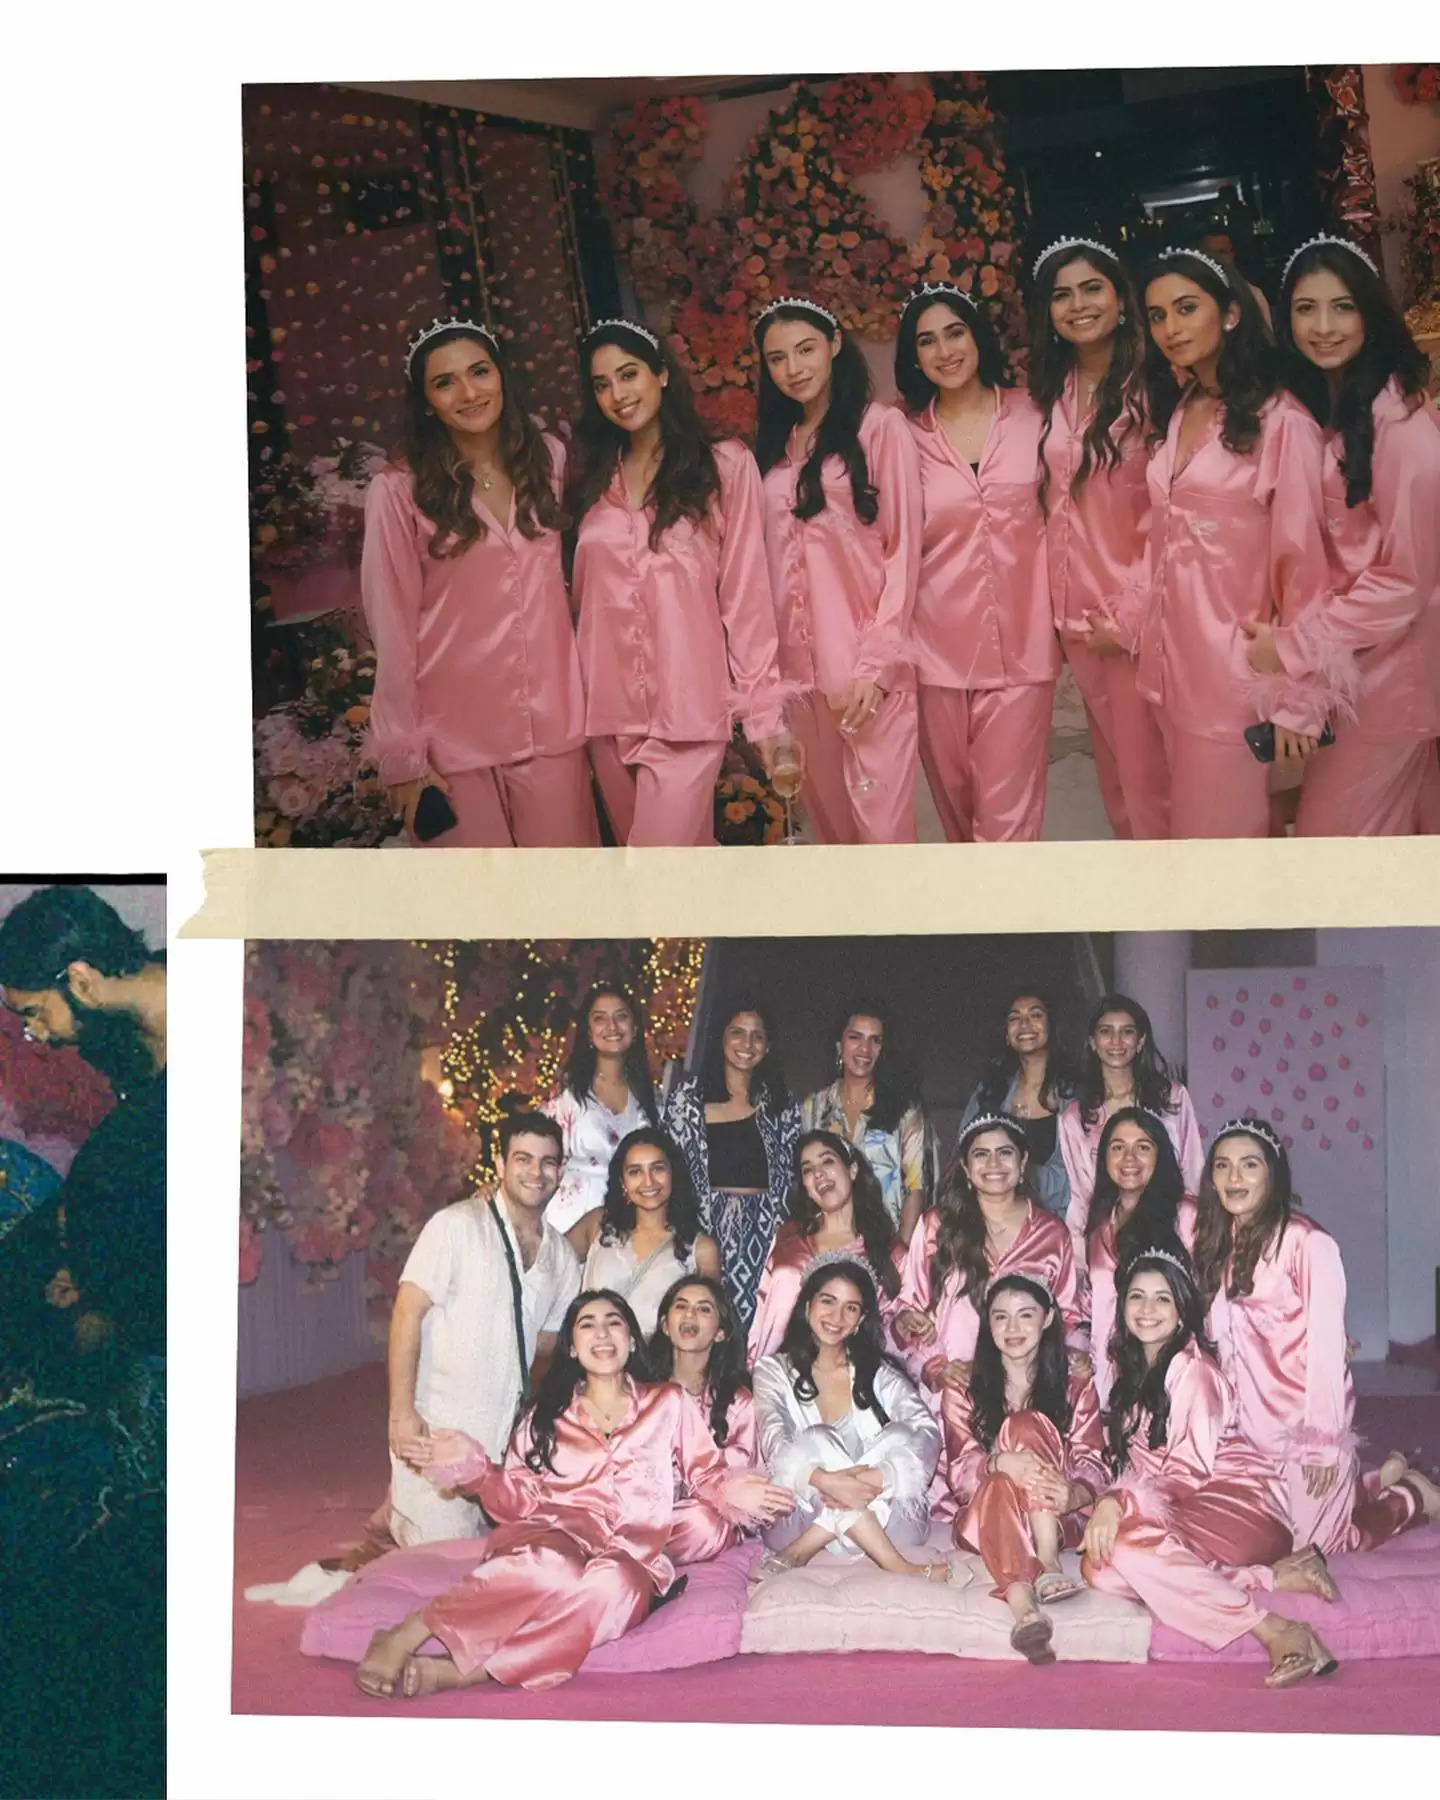 Radhika Product owner's Bridal Bathe Was A Princess Diaries-Themed Slumber Social gathering!